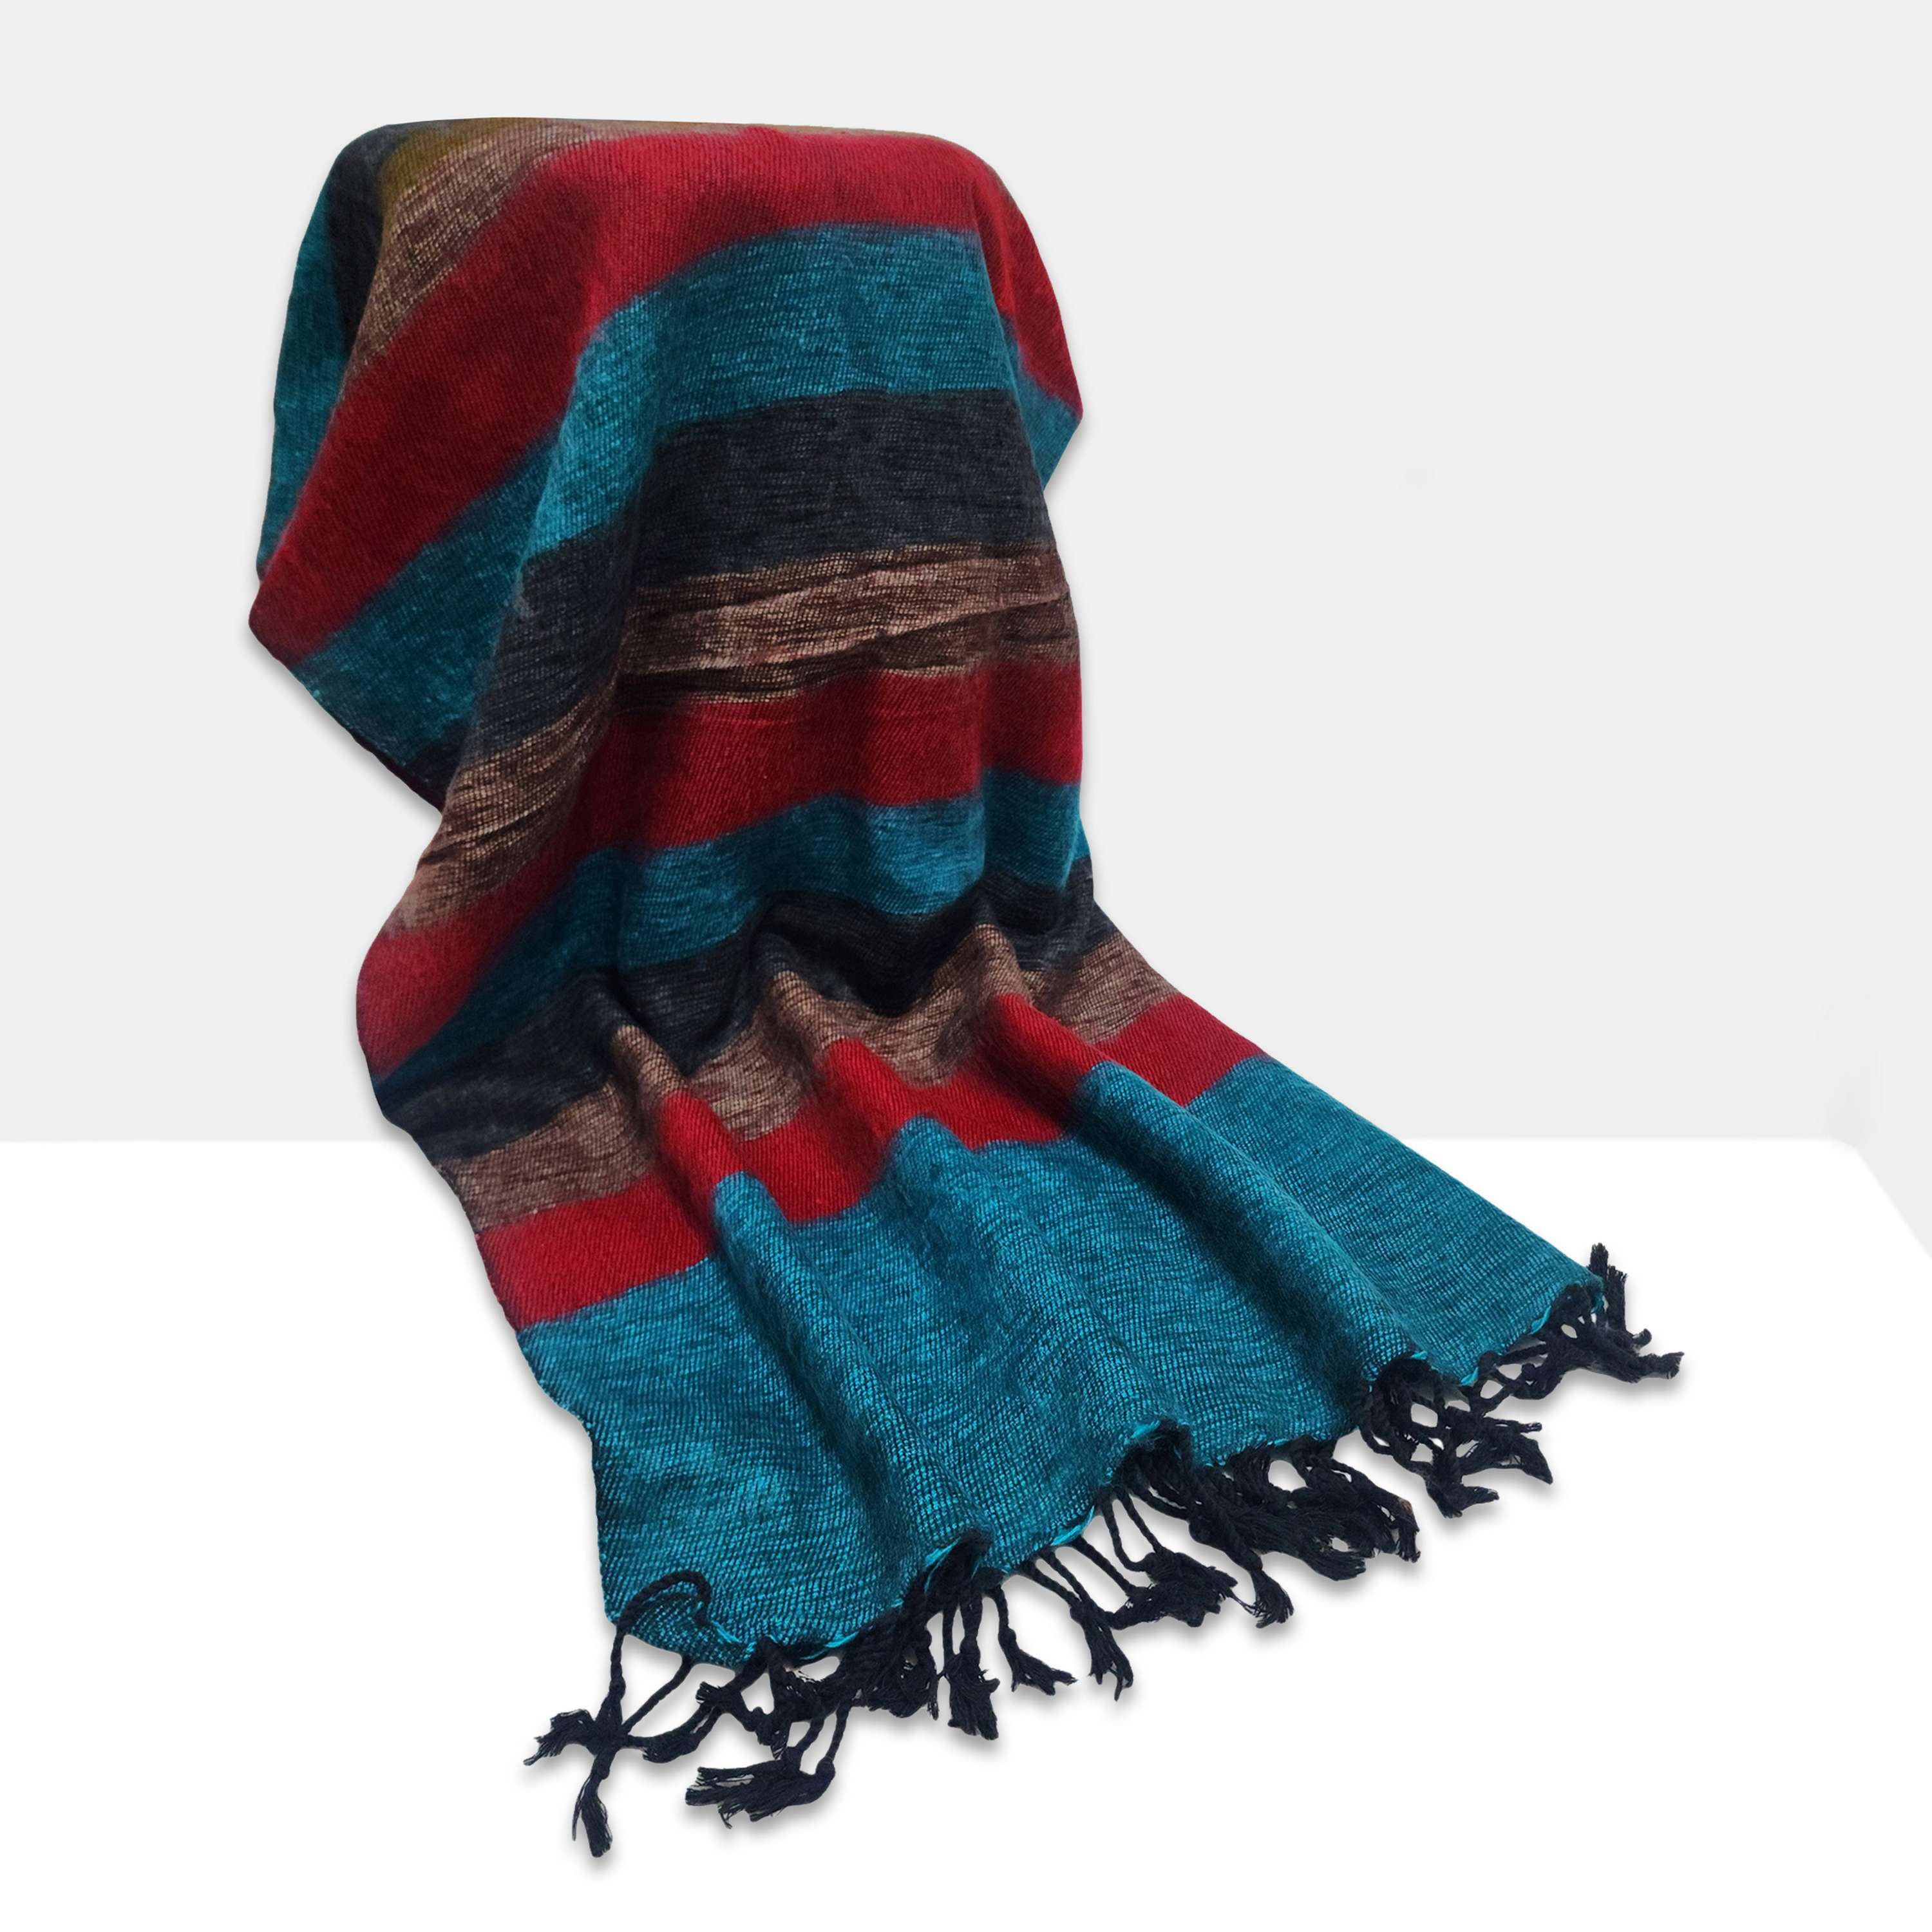 Yak Wool Blanket, Nepali Acrylic Hand Loom Blanket, multi-color